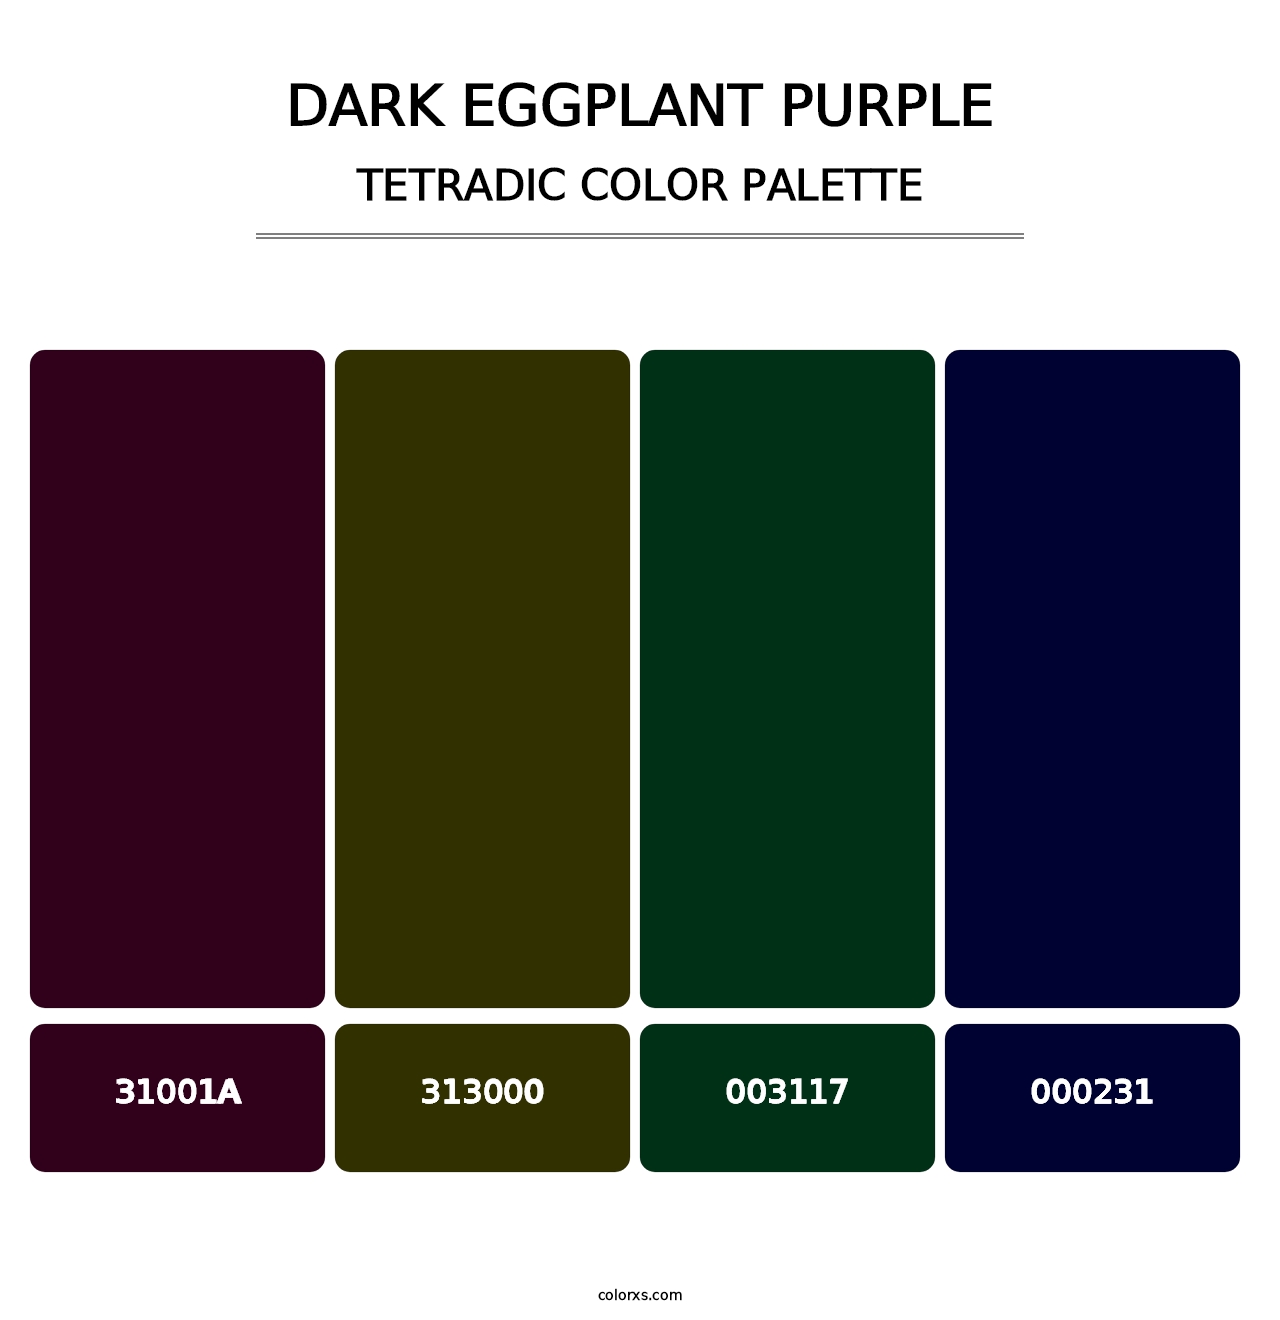 Dark Eggplant Purple - Tetradic Color Palette